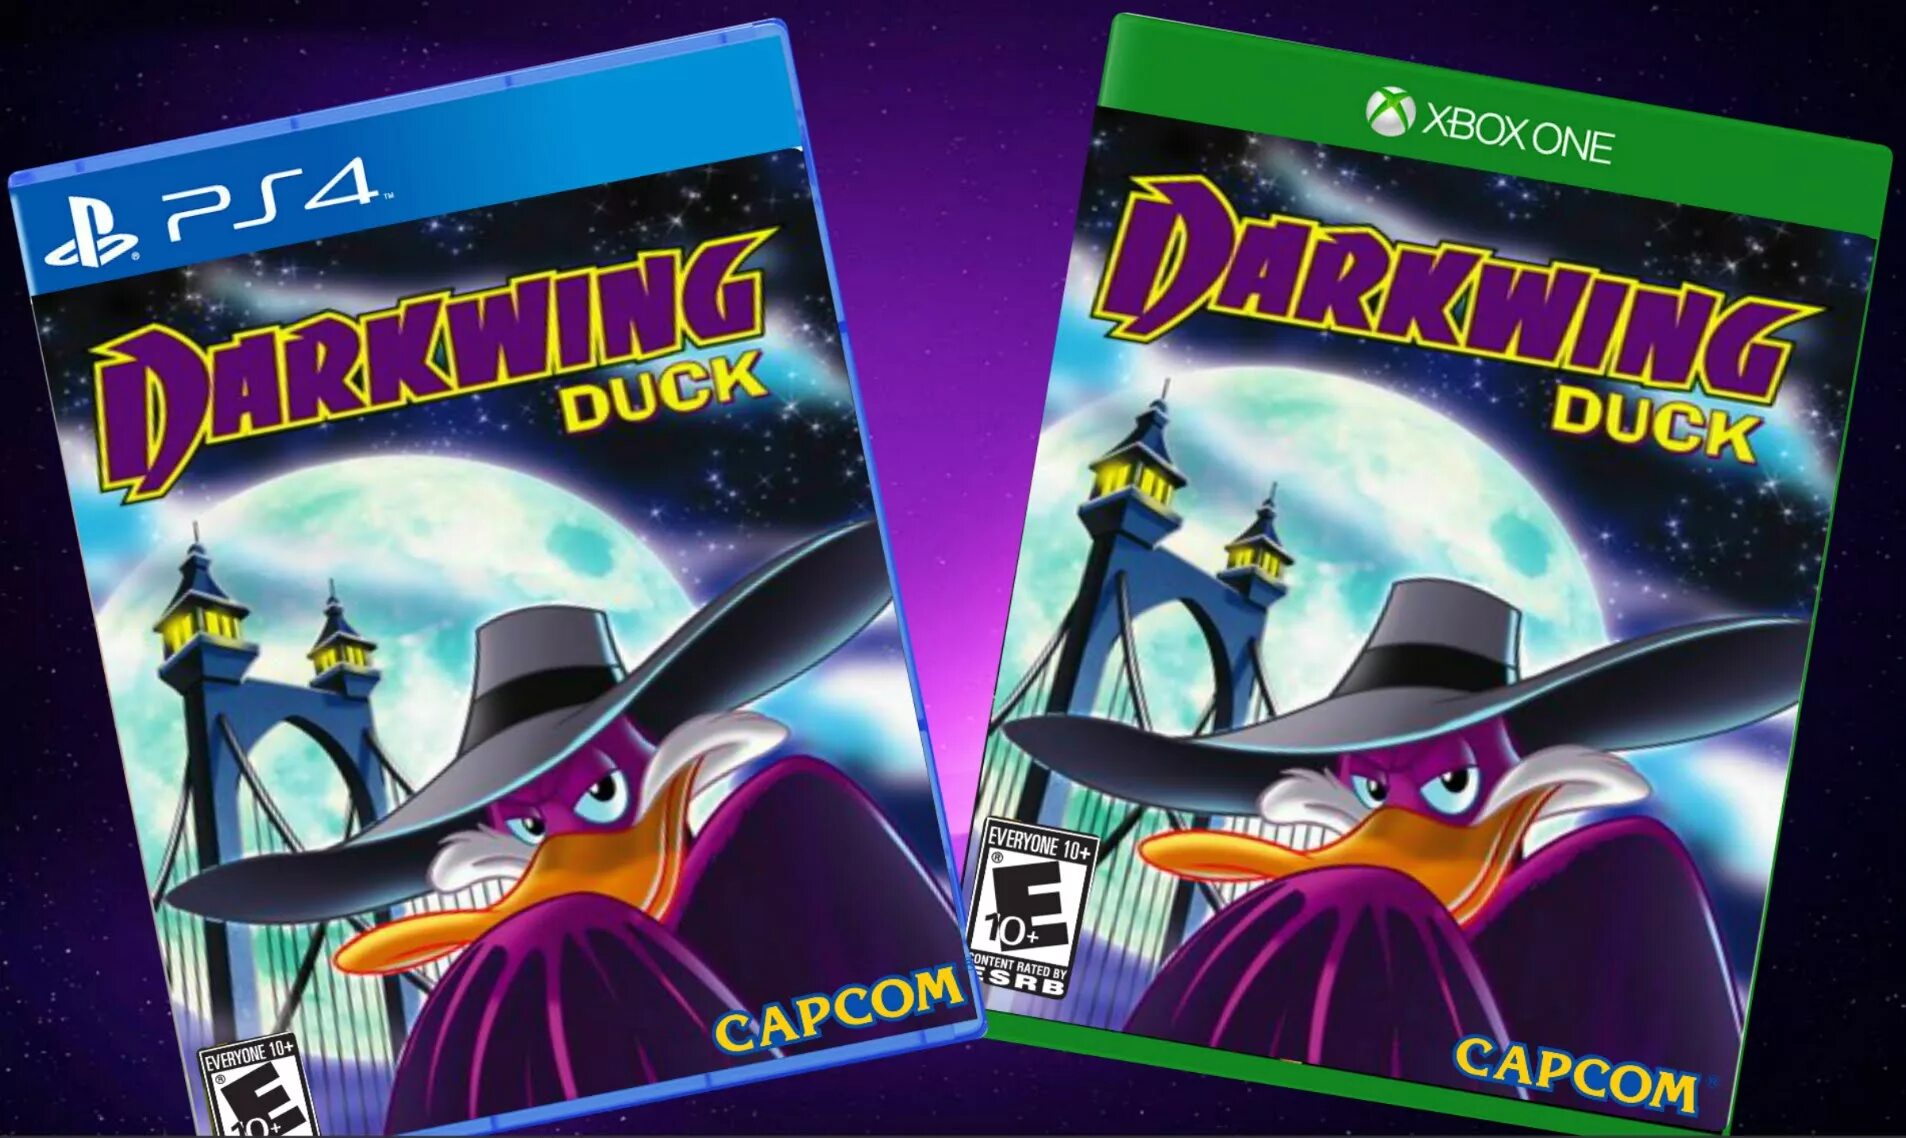 Darkwing Duck игра. Черный плащ игра ремастер. Черный плащ DVD. Черный плащ игрушка.